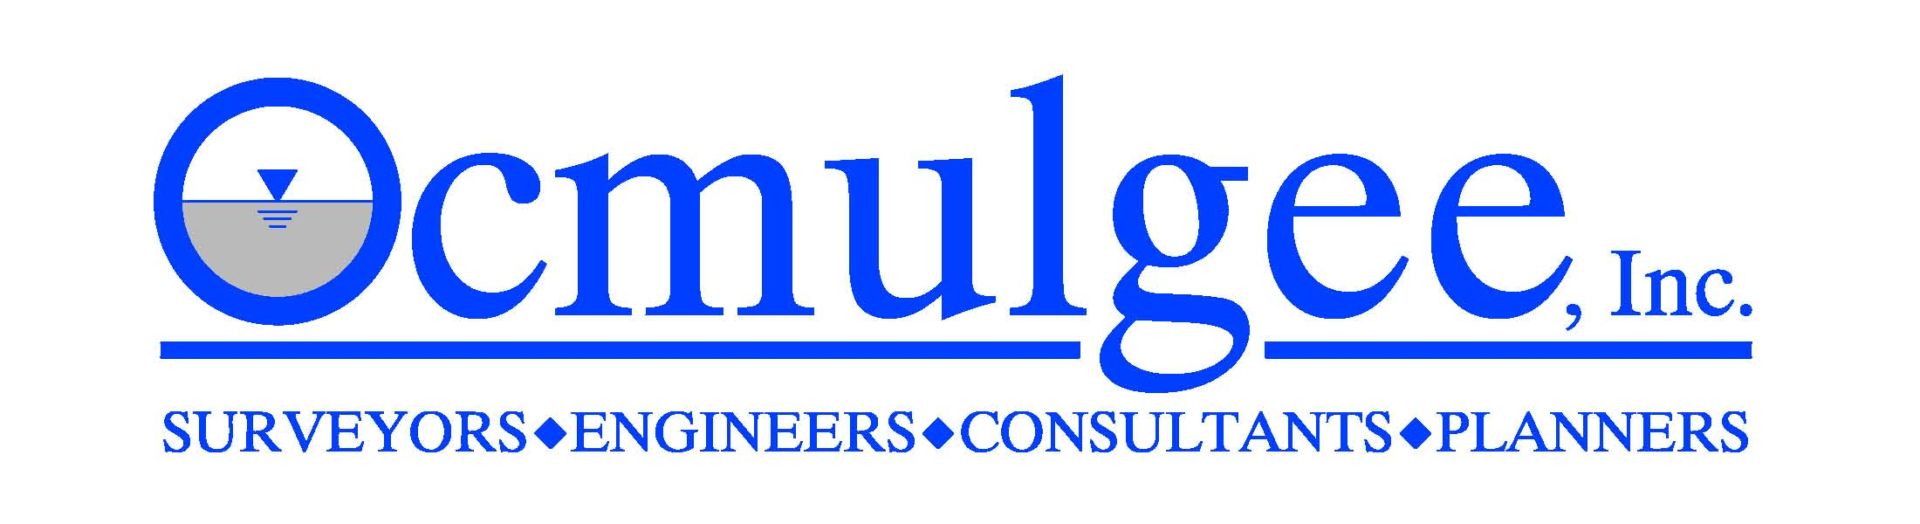 Ocmulgee Ing logo